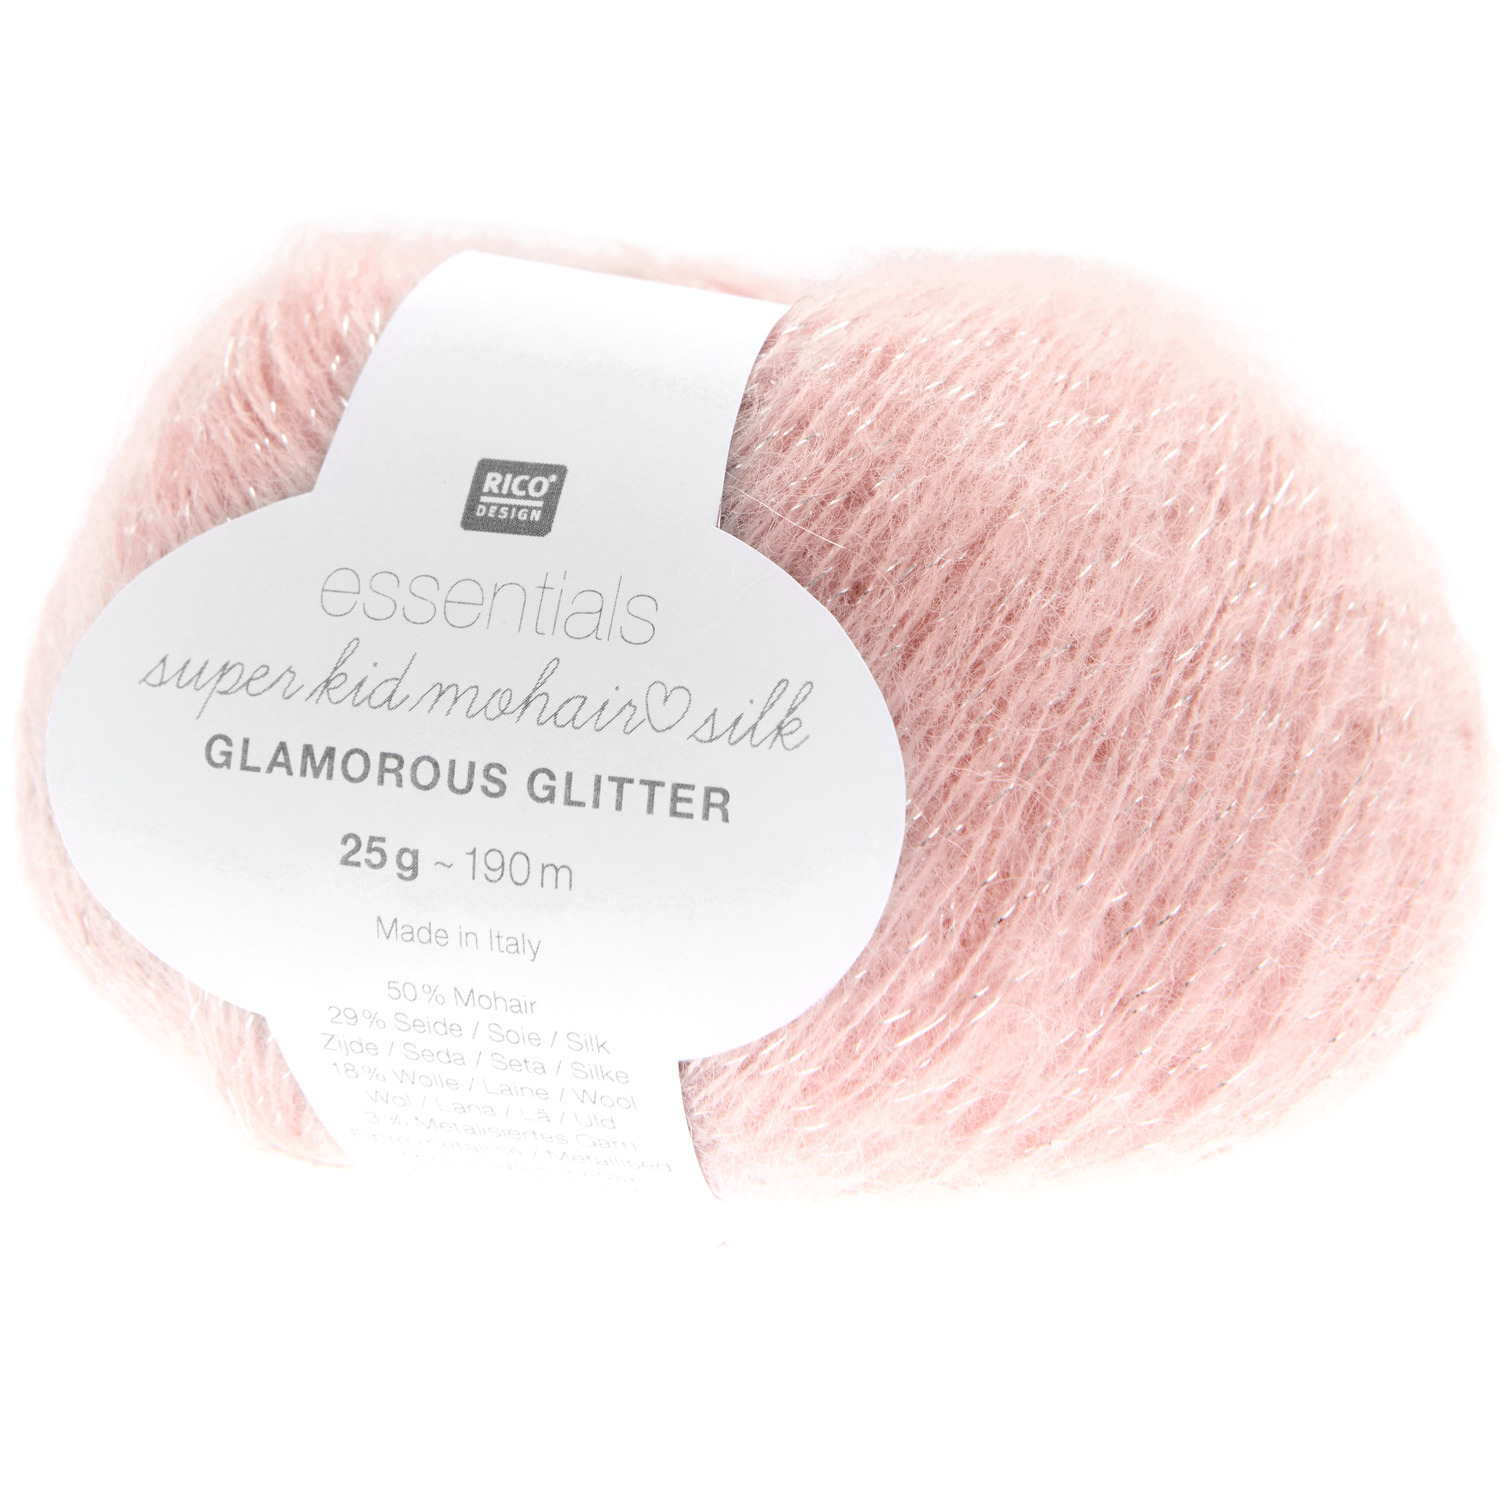 Essentials Super Kid Mohair Loves Silk Glamorous Glitter